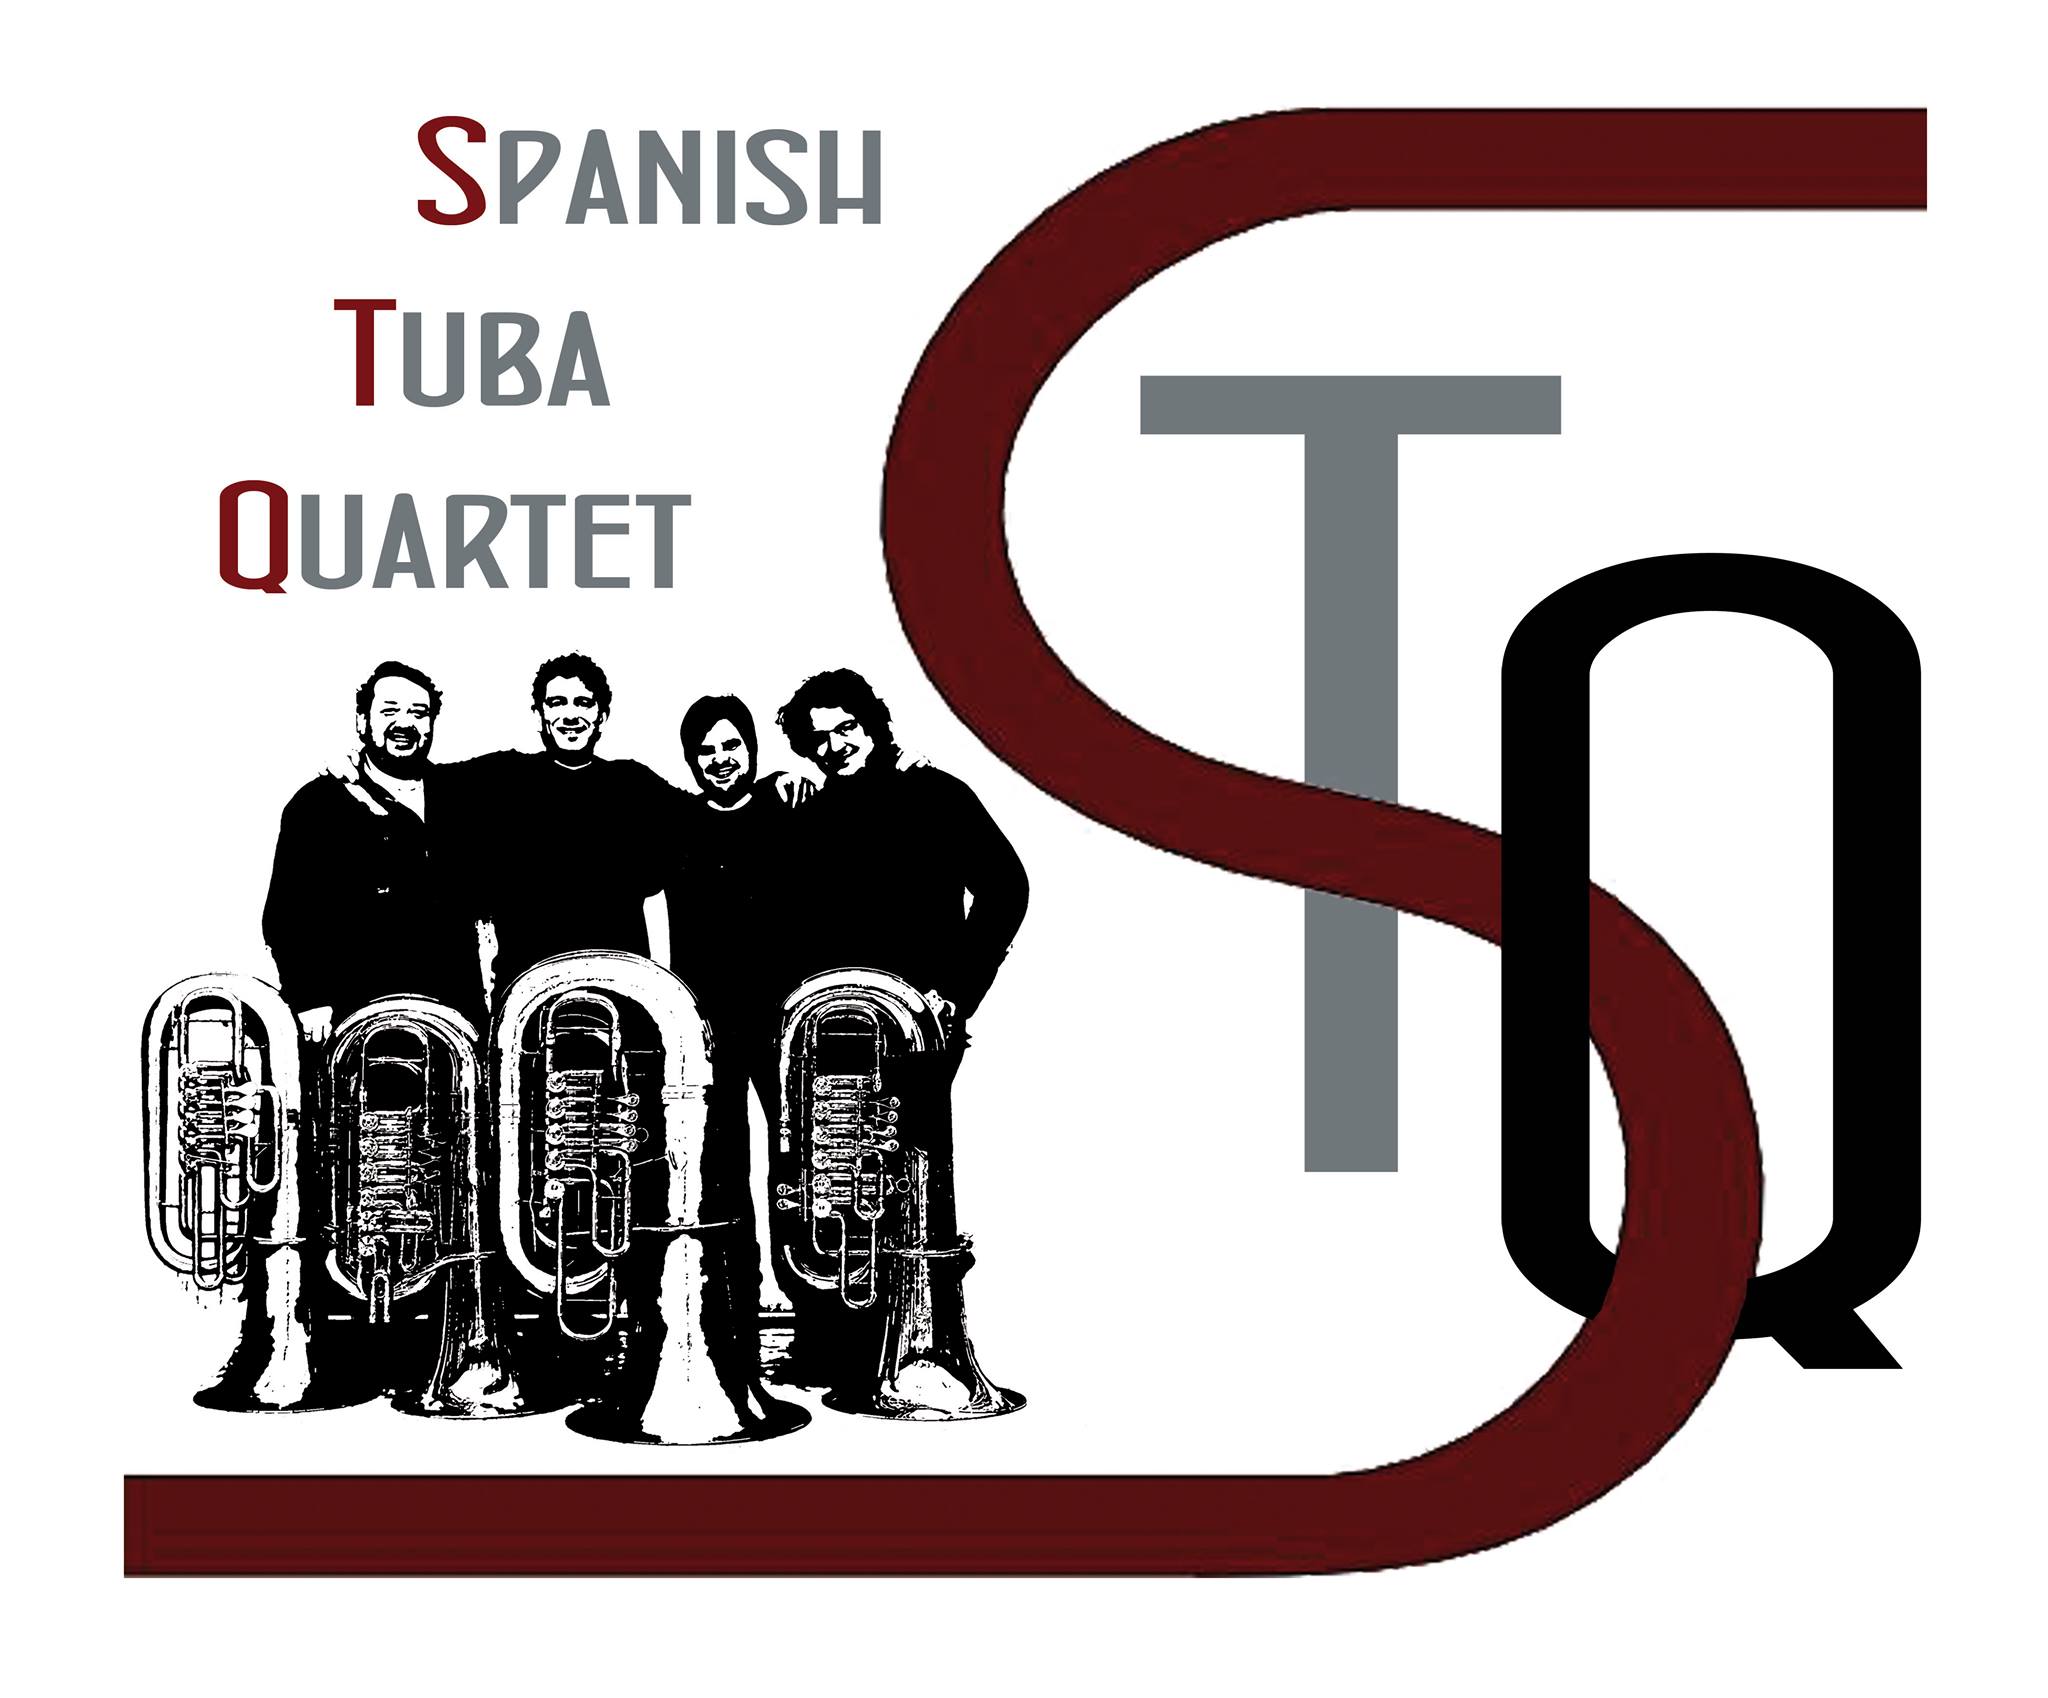 Spanish Tuba Quartet